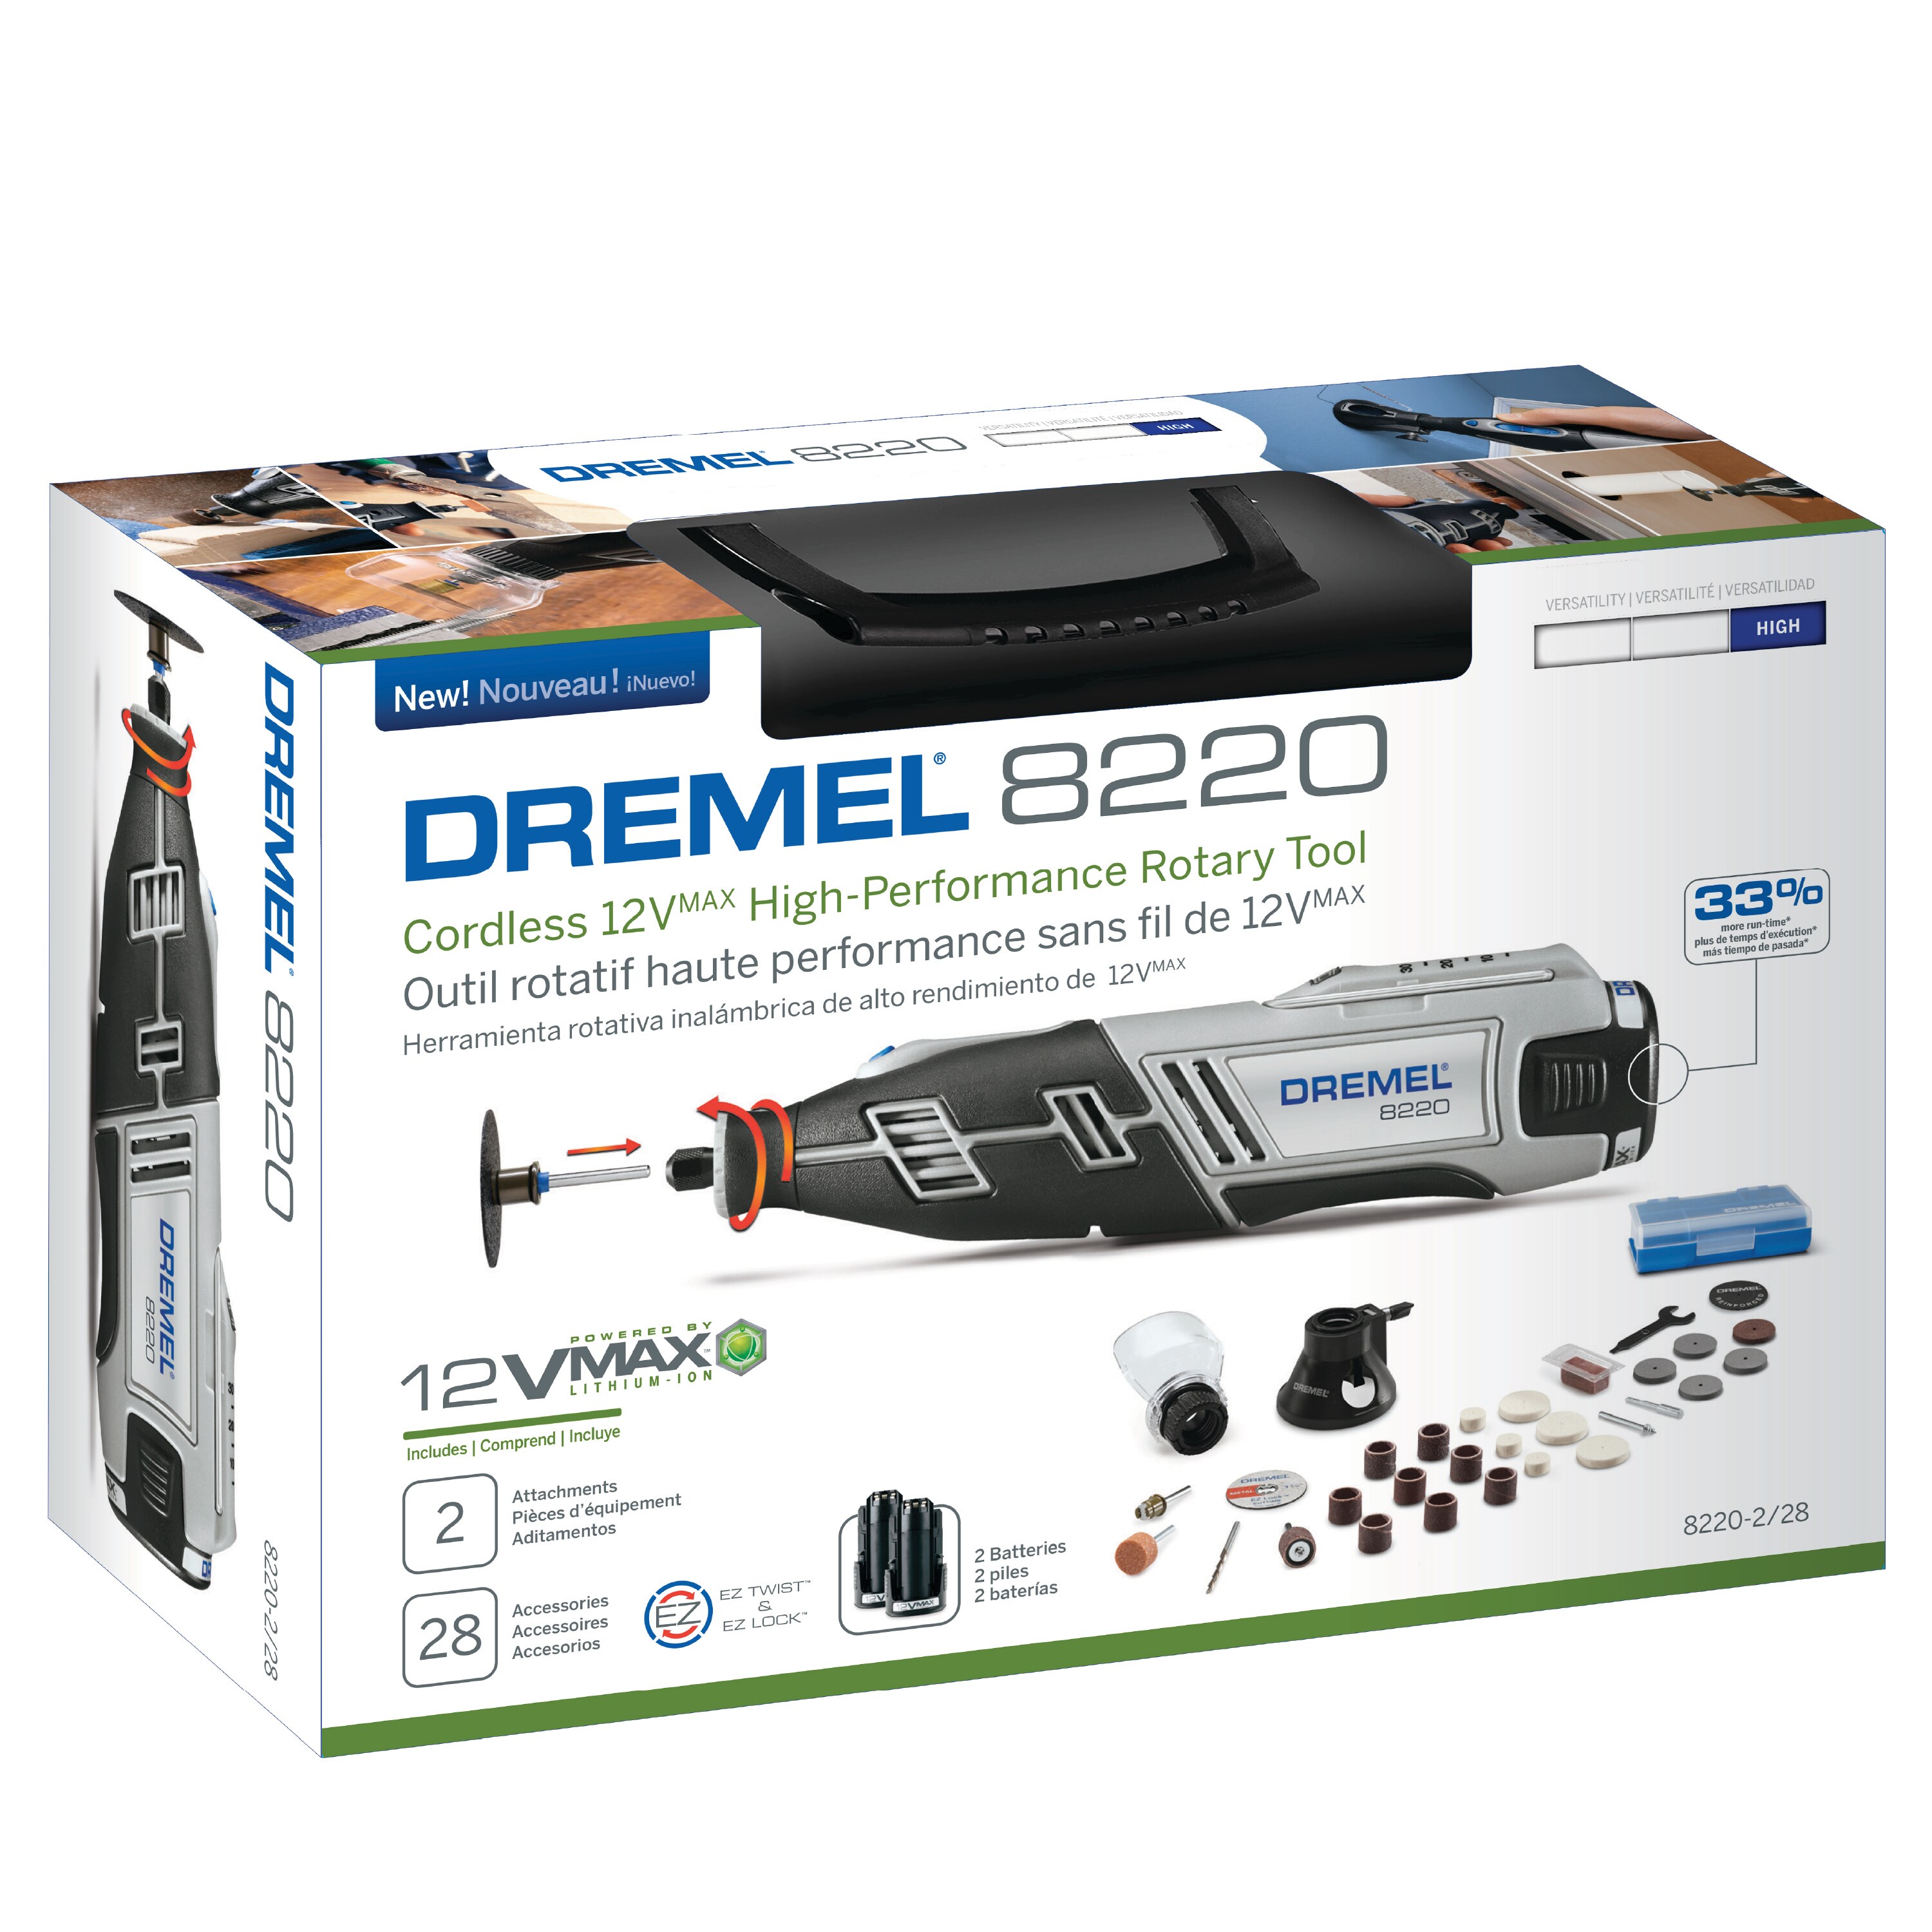 Dremel 8220 cordless - tools - by owner - sale - craigslist